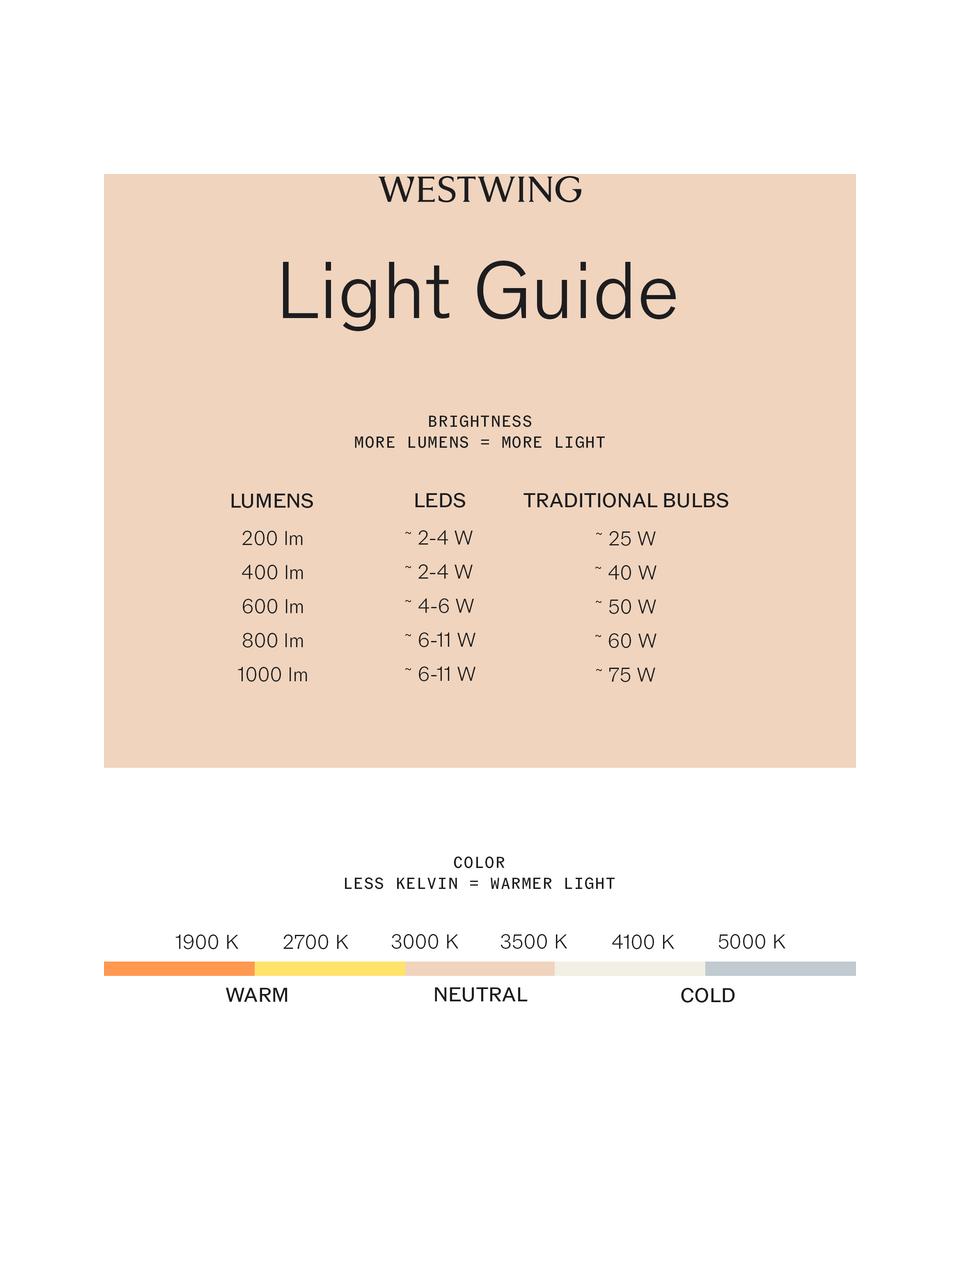 Grosse Dimmbare LED-Pendelleuchte Perla, verschiedene Grössen, Goldfarben, Weiss, Ø 62 cm